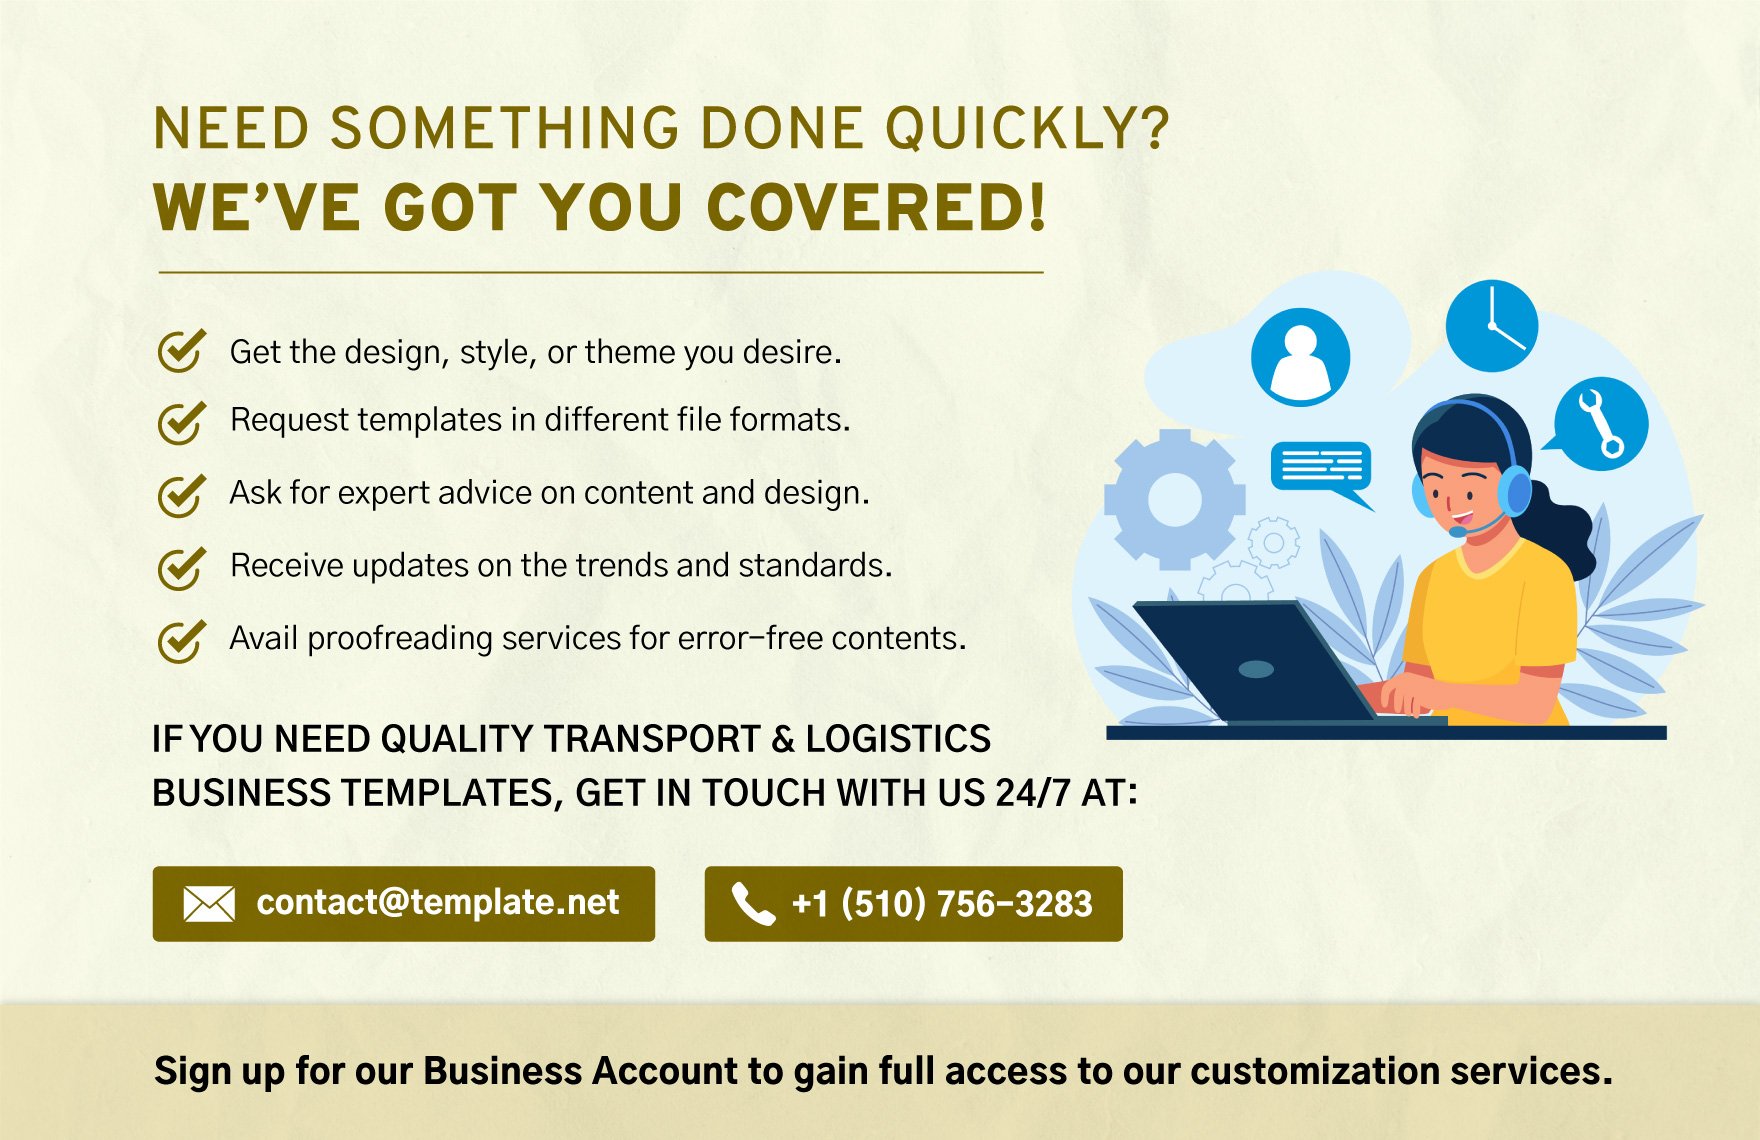 Transport and Logistics Vendor Information Update Form Template